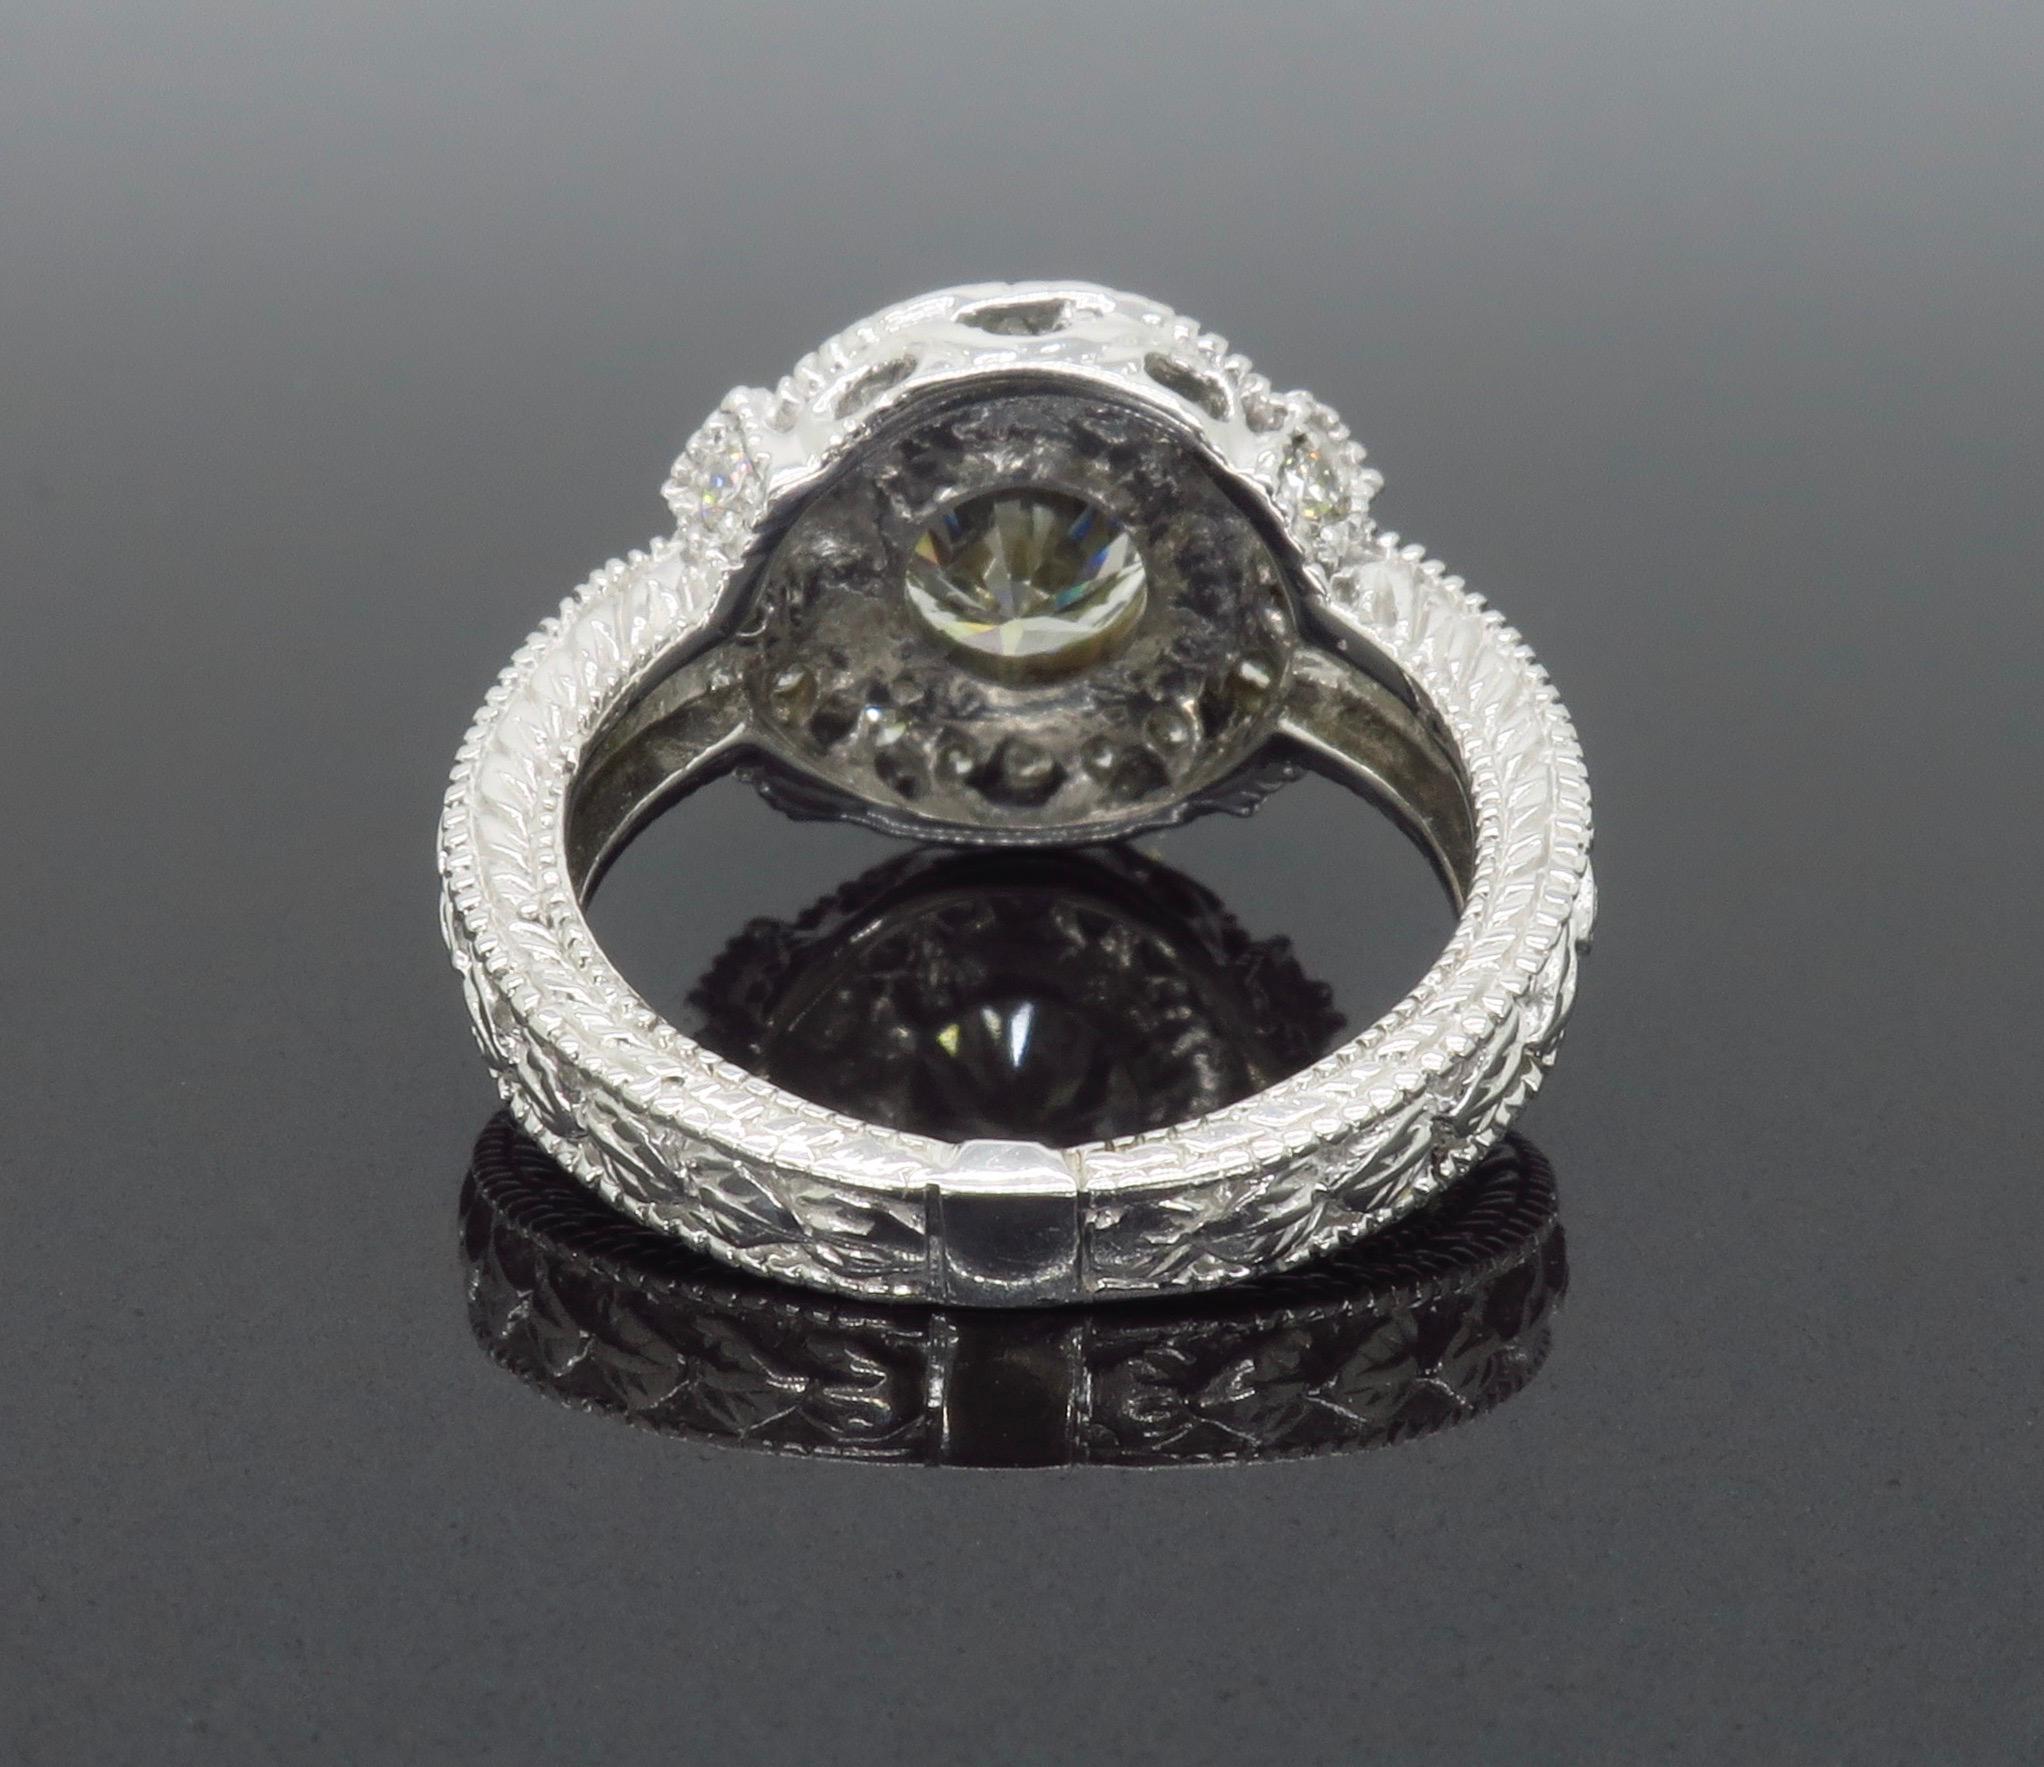 Vintage Inspired 1.27 Carat Diamond Ring Made in 14 Karat White Gold For Sale 2